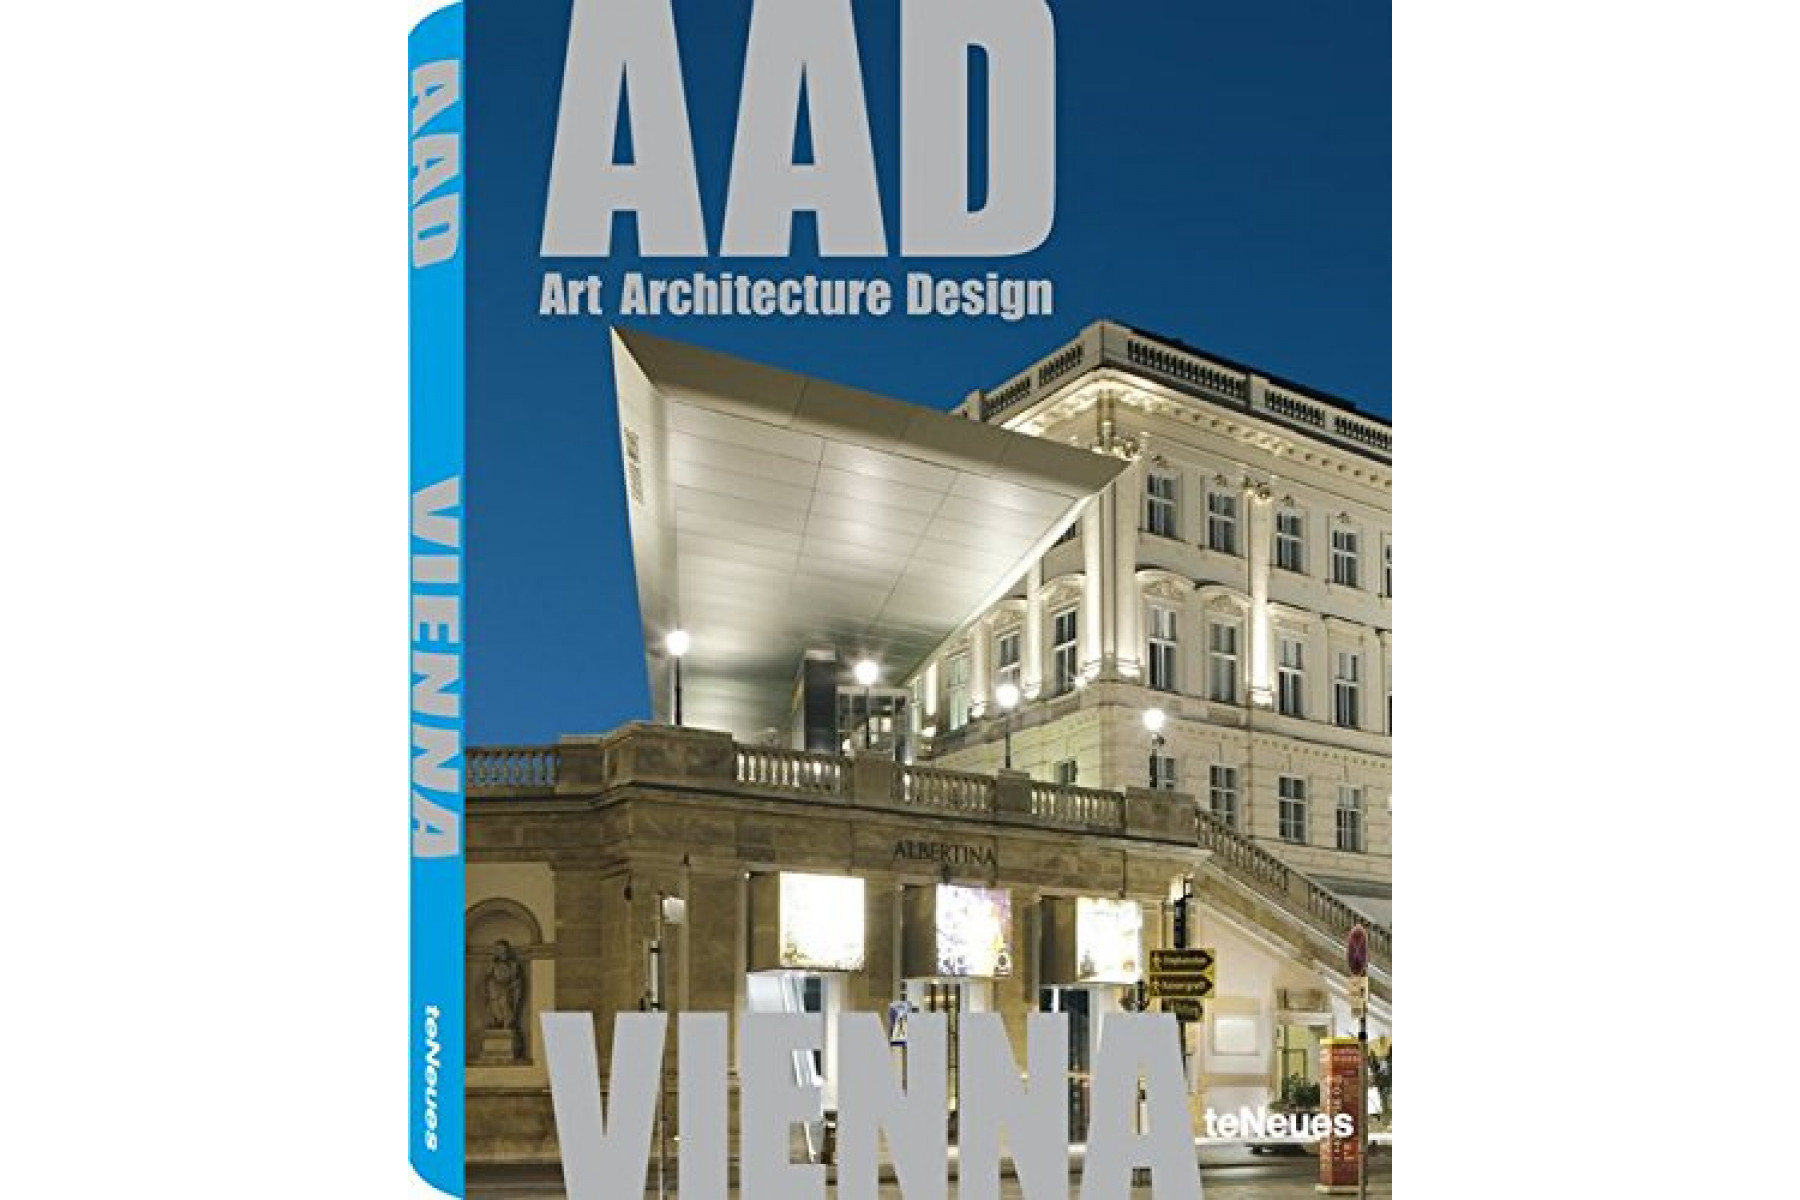 AAD Vienna: Art Architecture Design